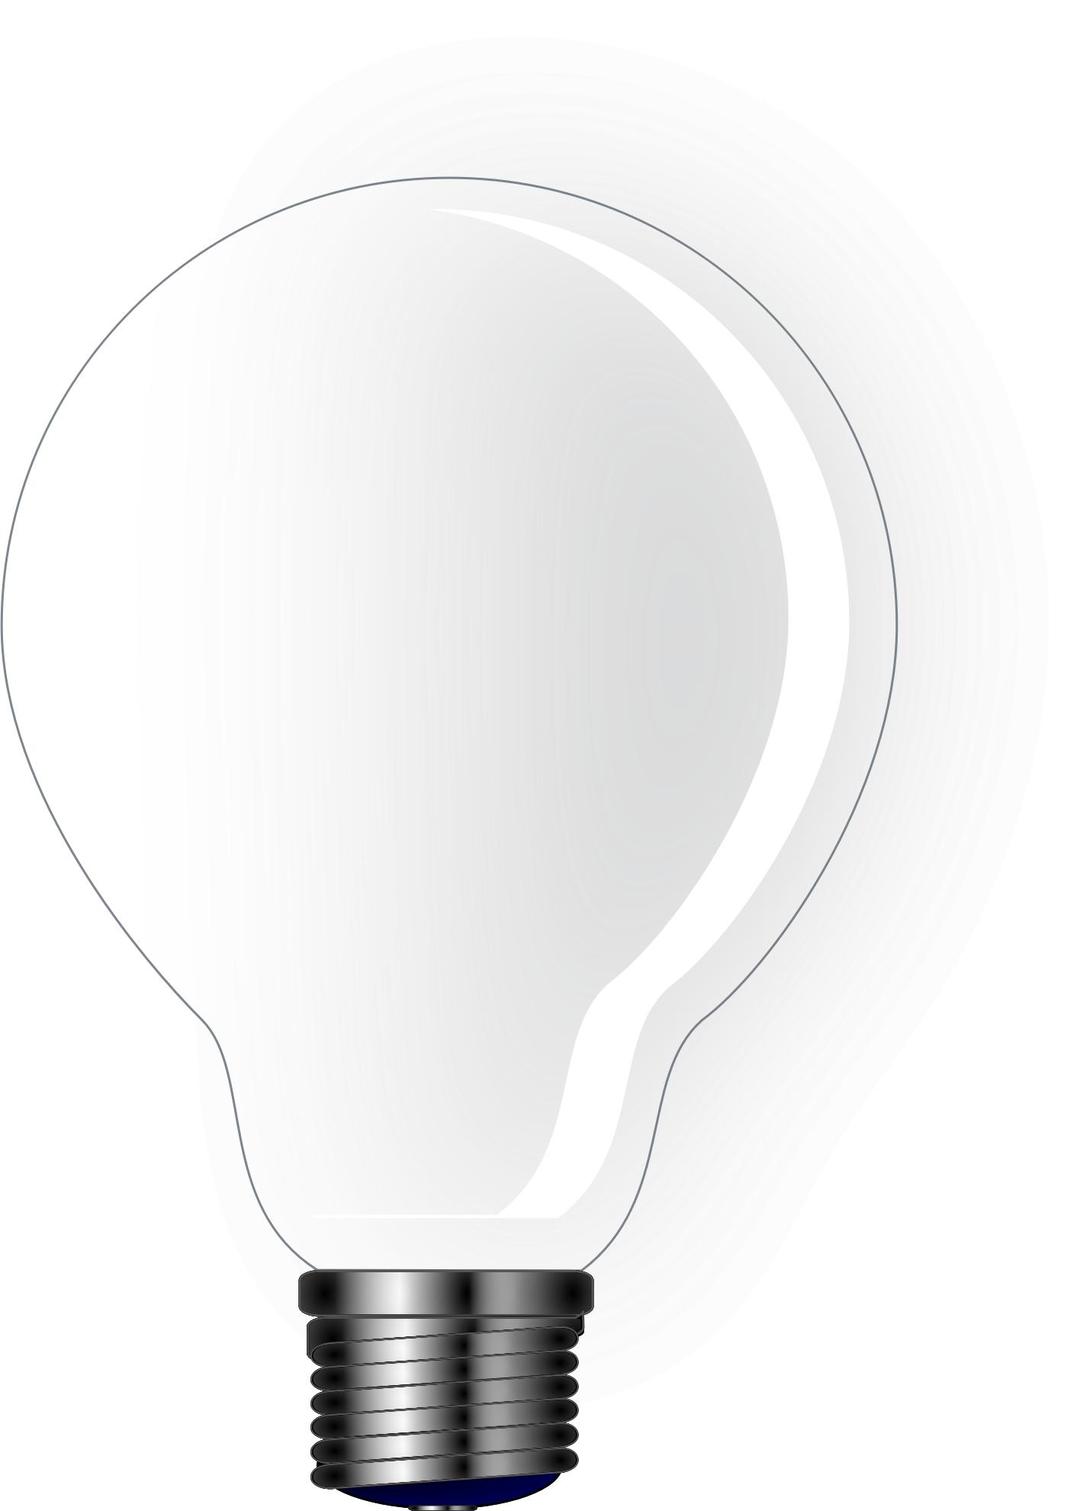 basic light bulb png transparent